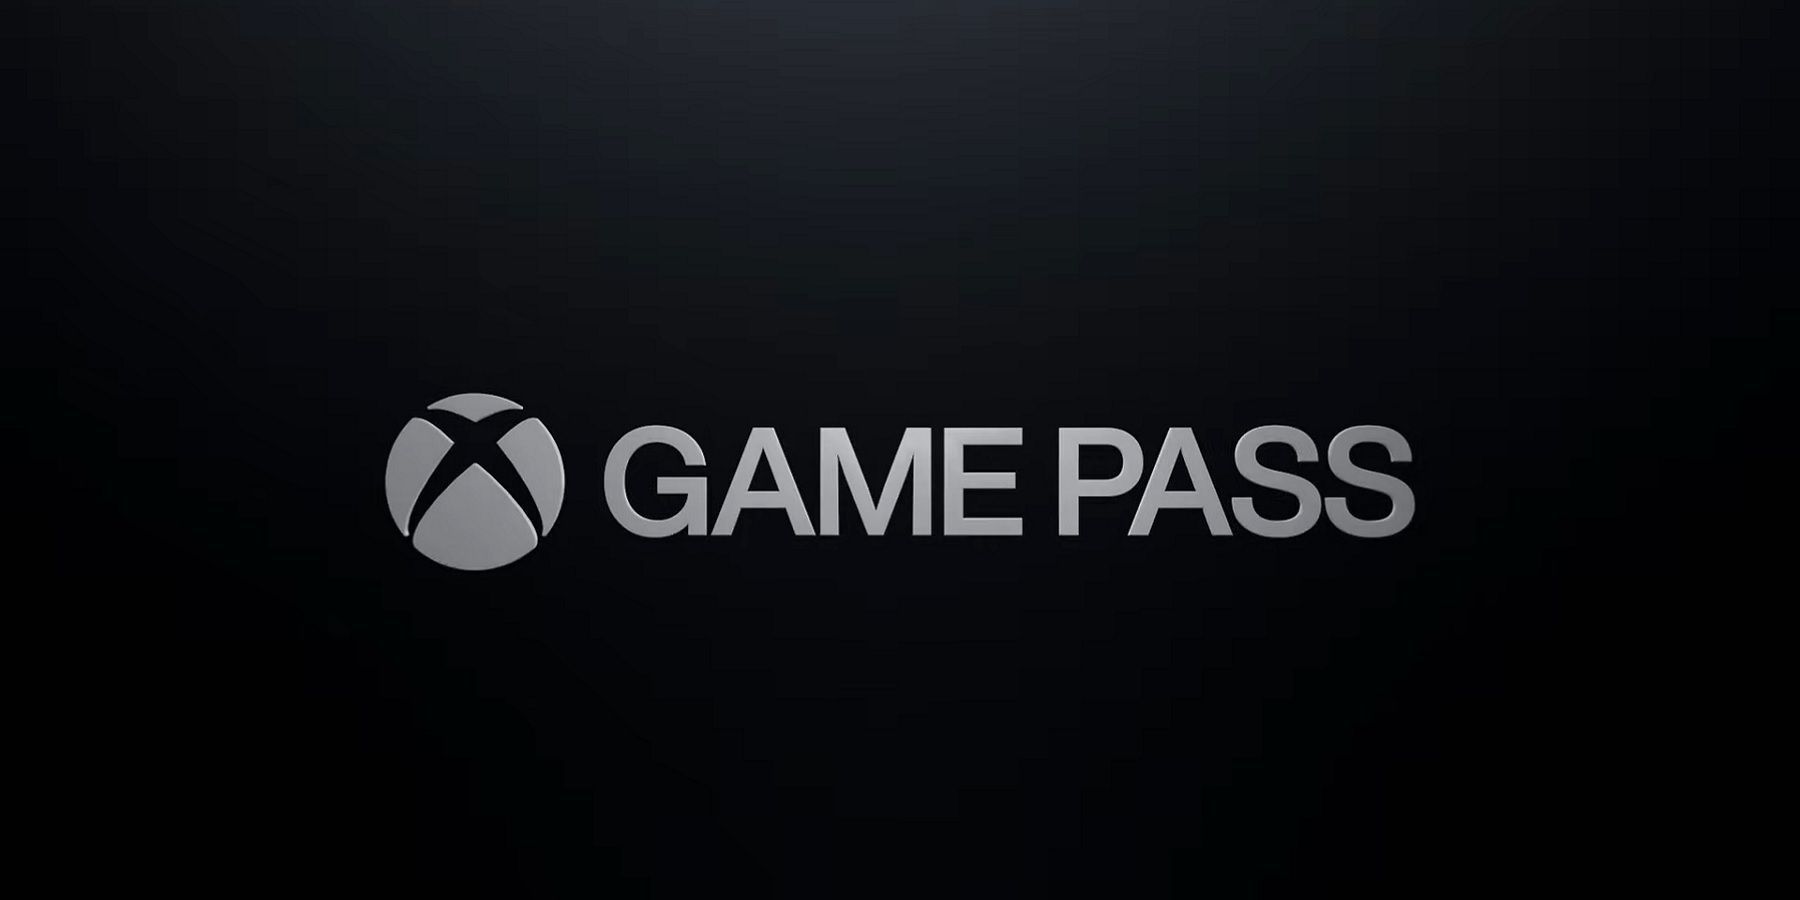 xbox-game-pass-black-and-white-logo-1